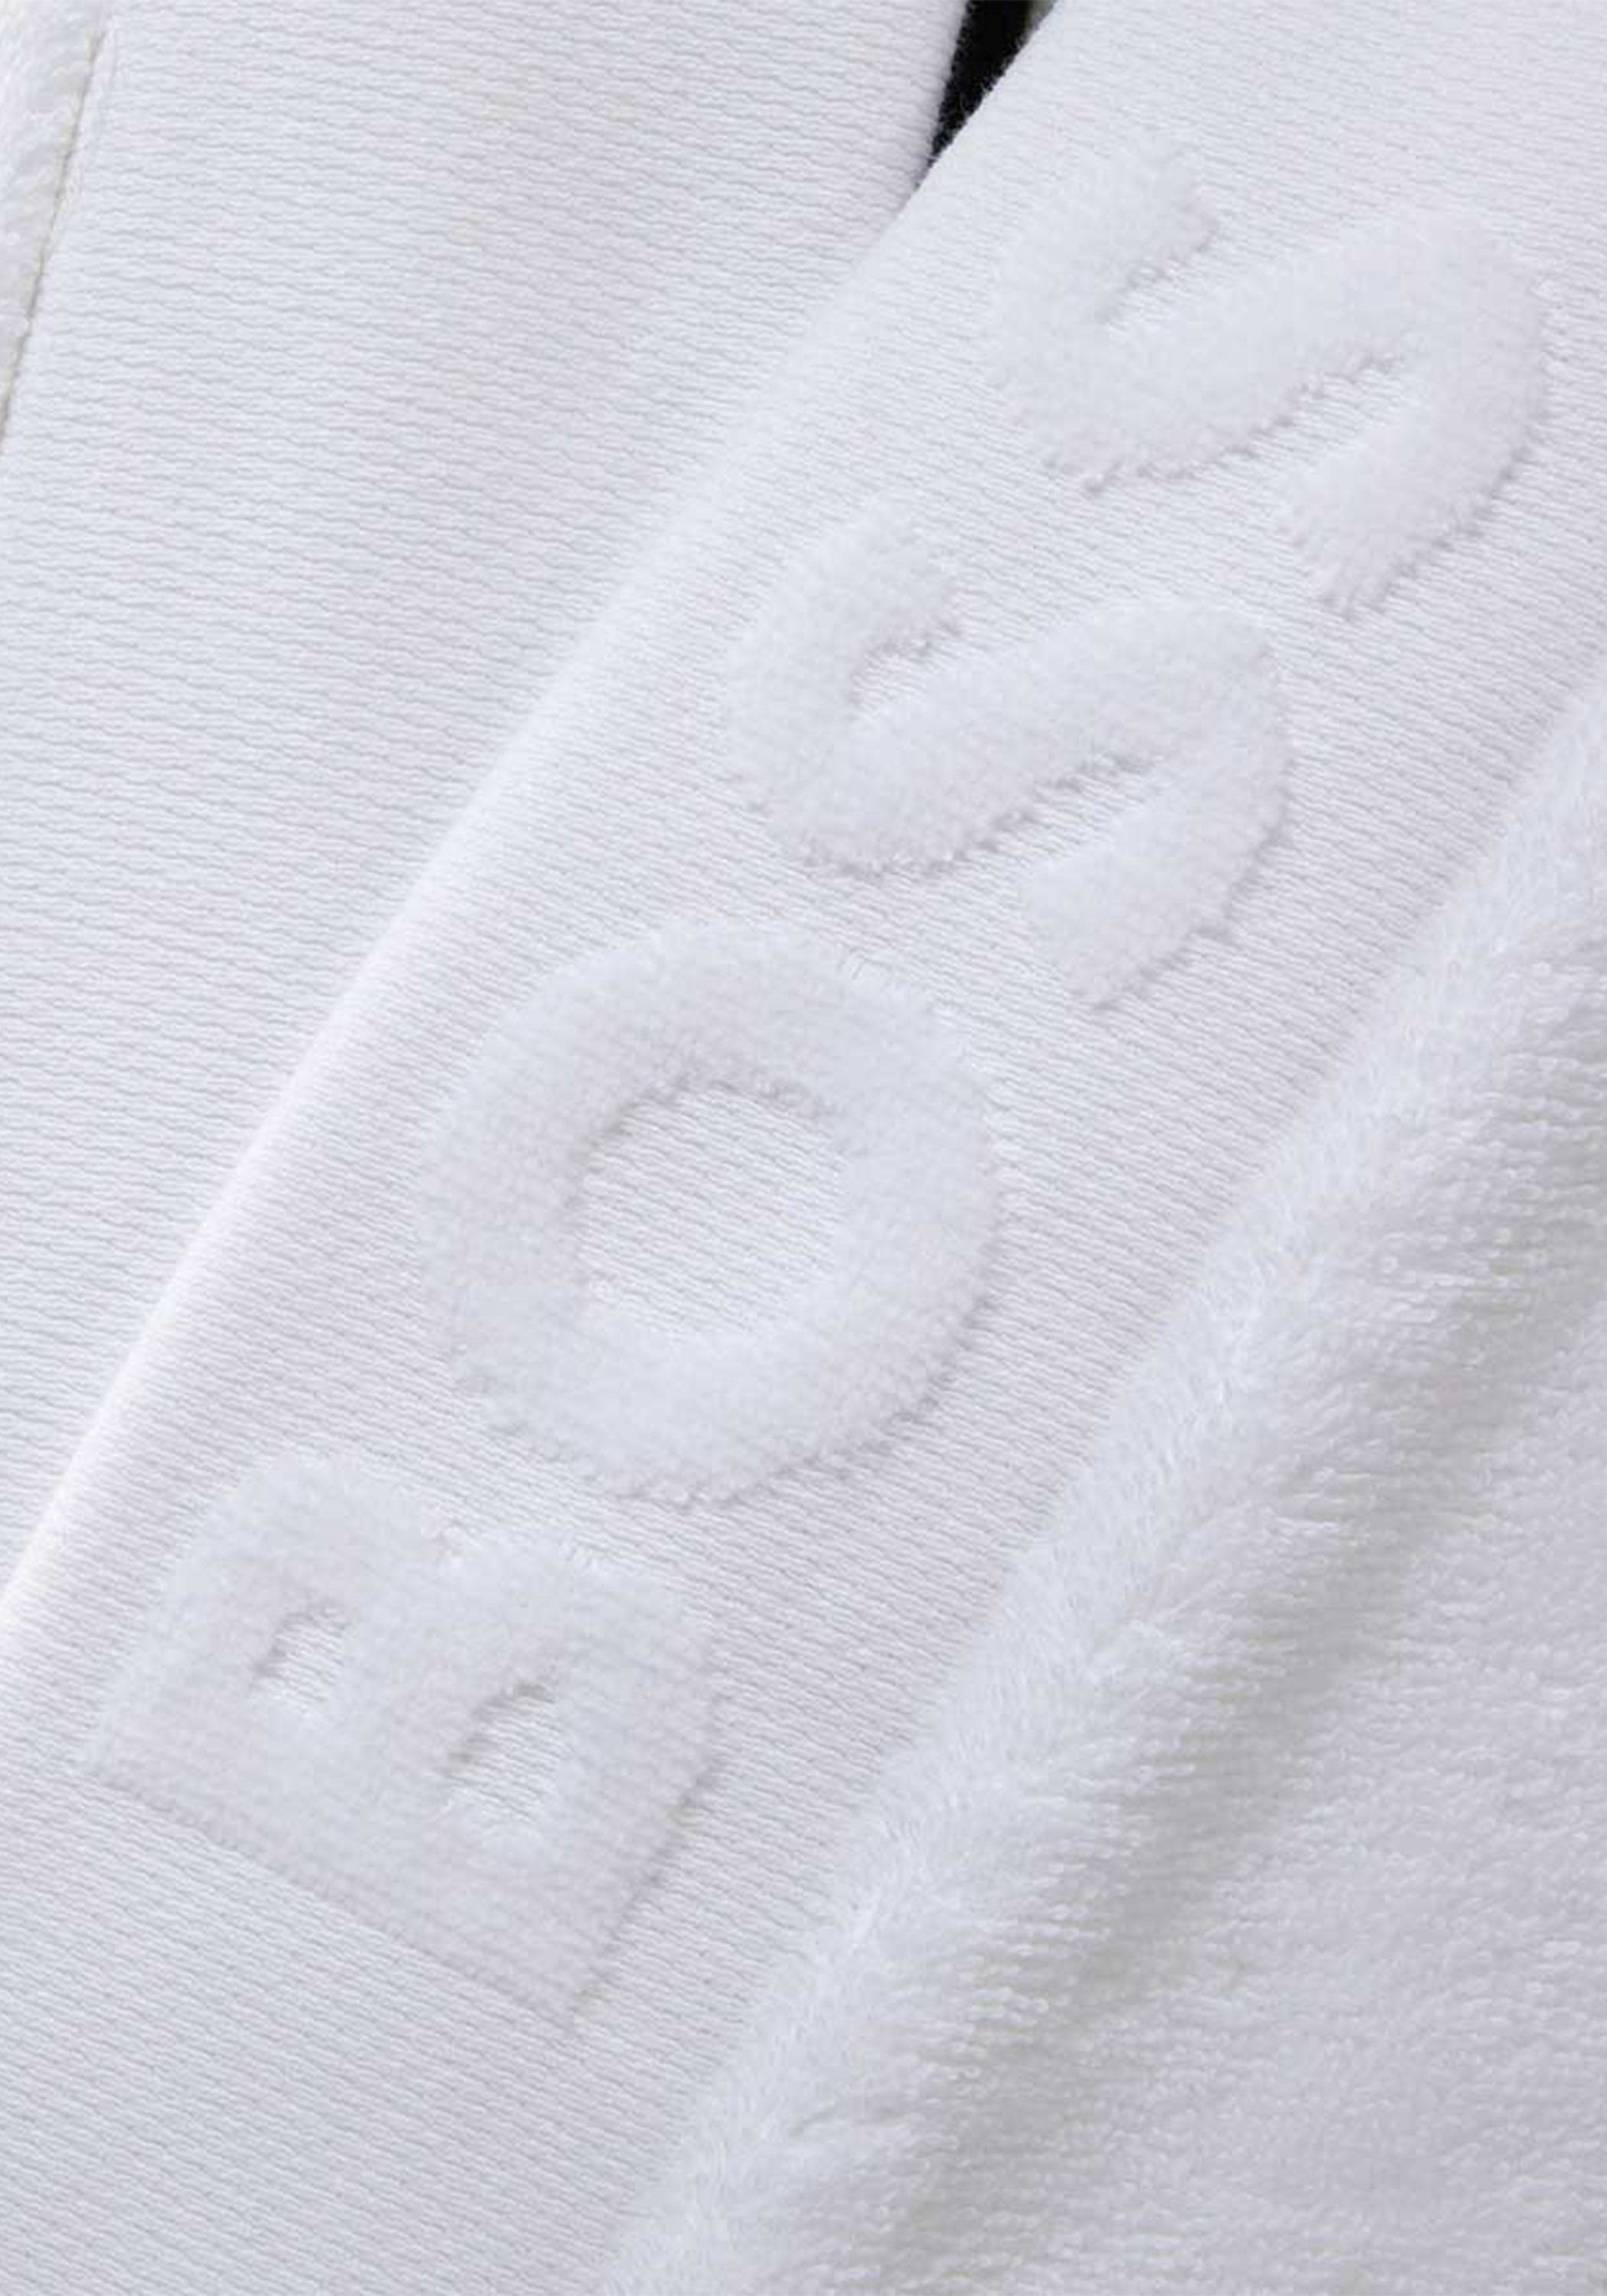 Hugo Boss Home Baumwolle, Design ICE Bademantel PLAIN, 100% mit modernem